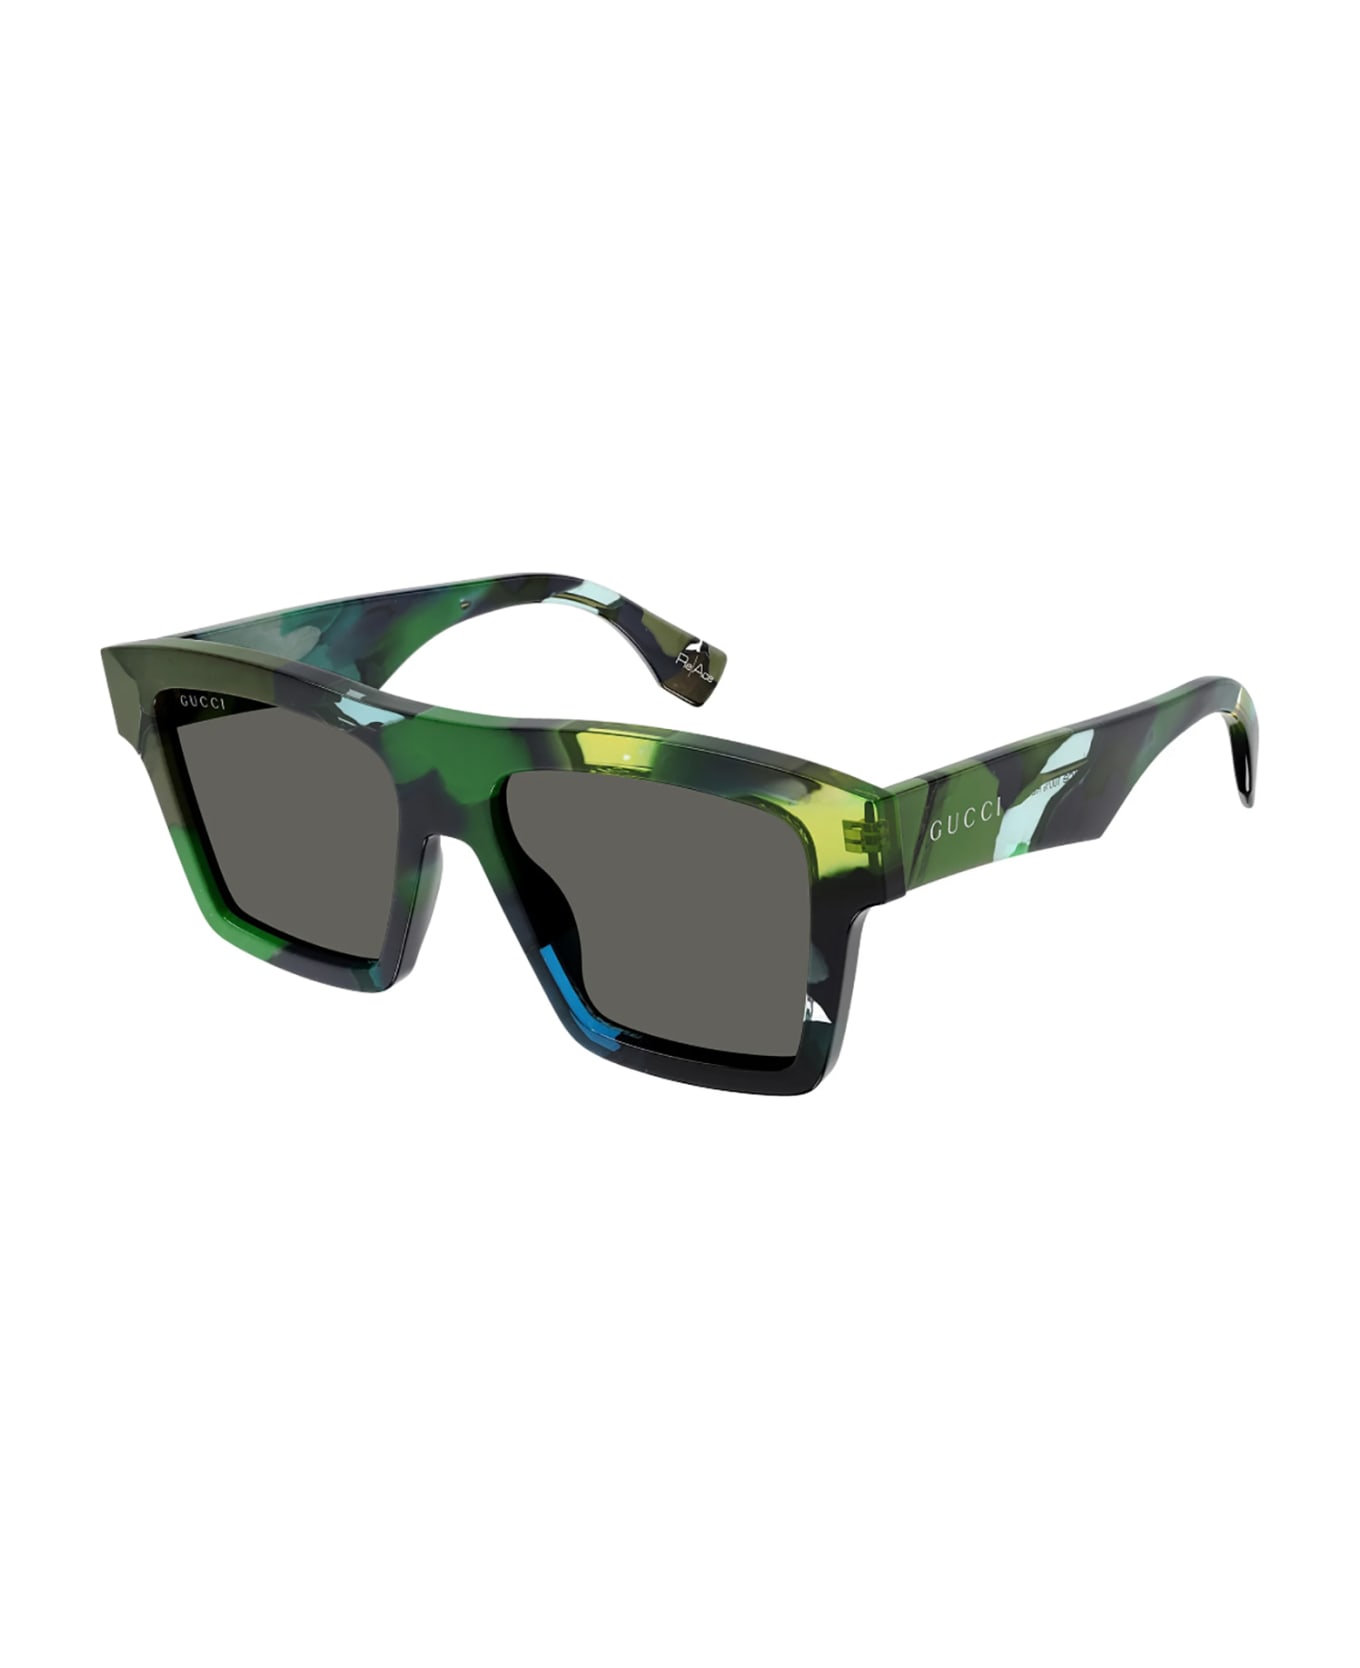 Gucci Eyewear GG1623S Sunglasses - Green Green Grey